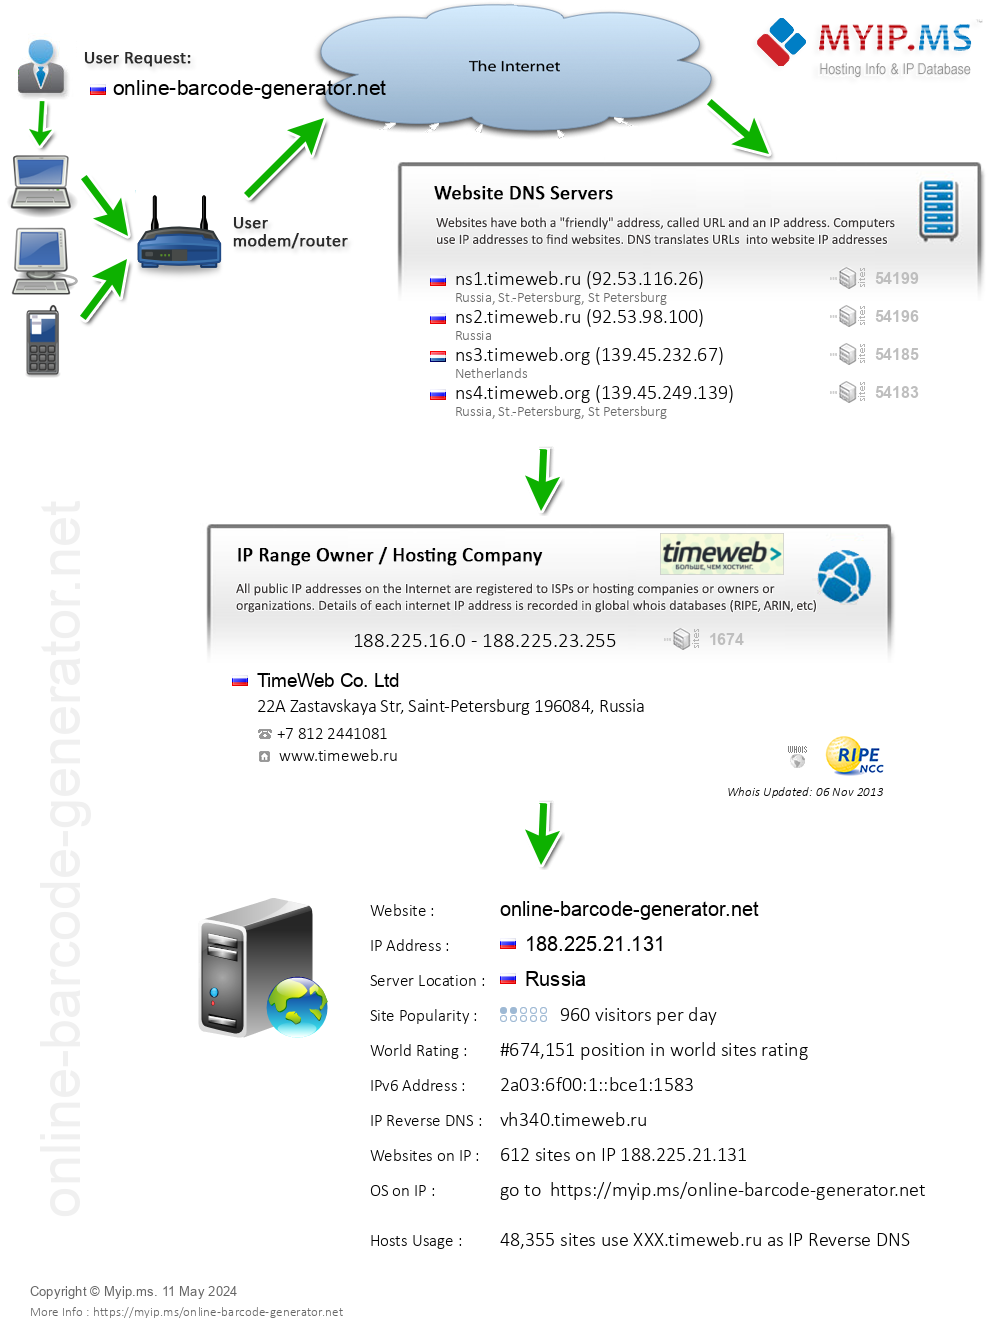 Online-barcode-generator.net - Website Hosting Visual IP Diagram